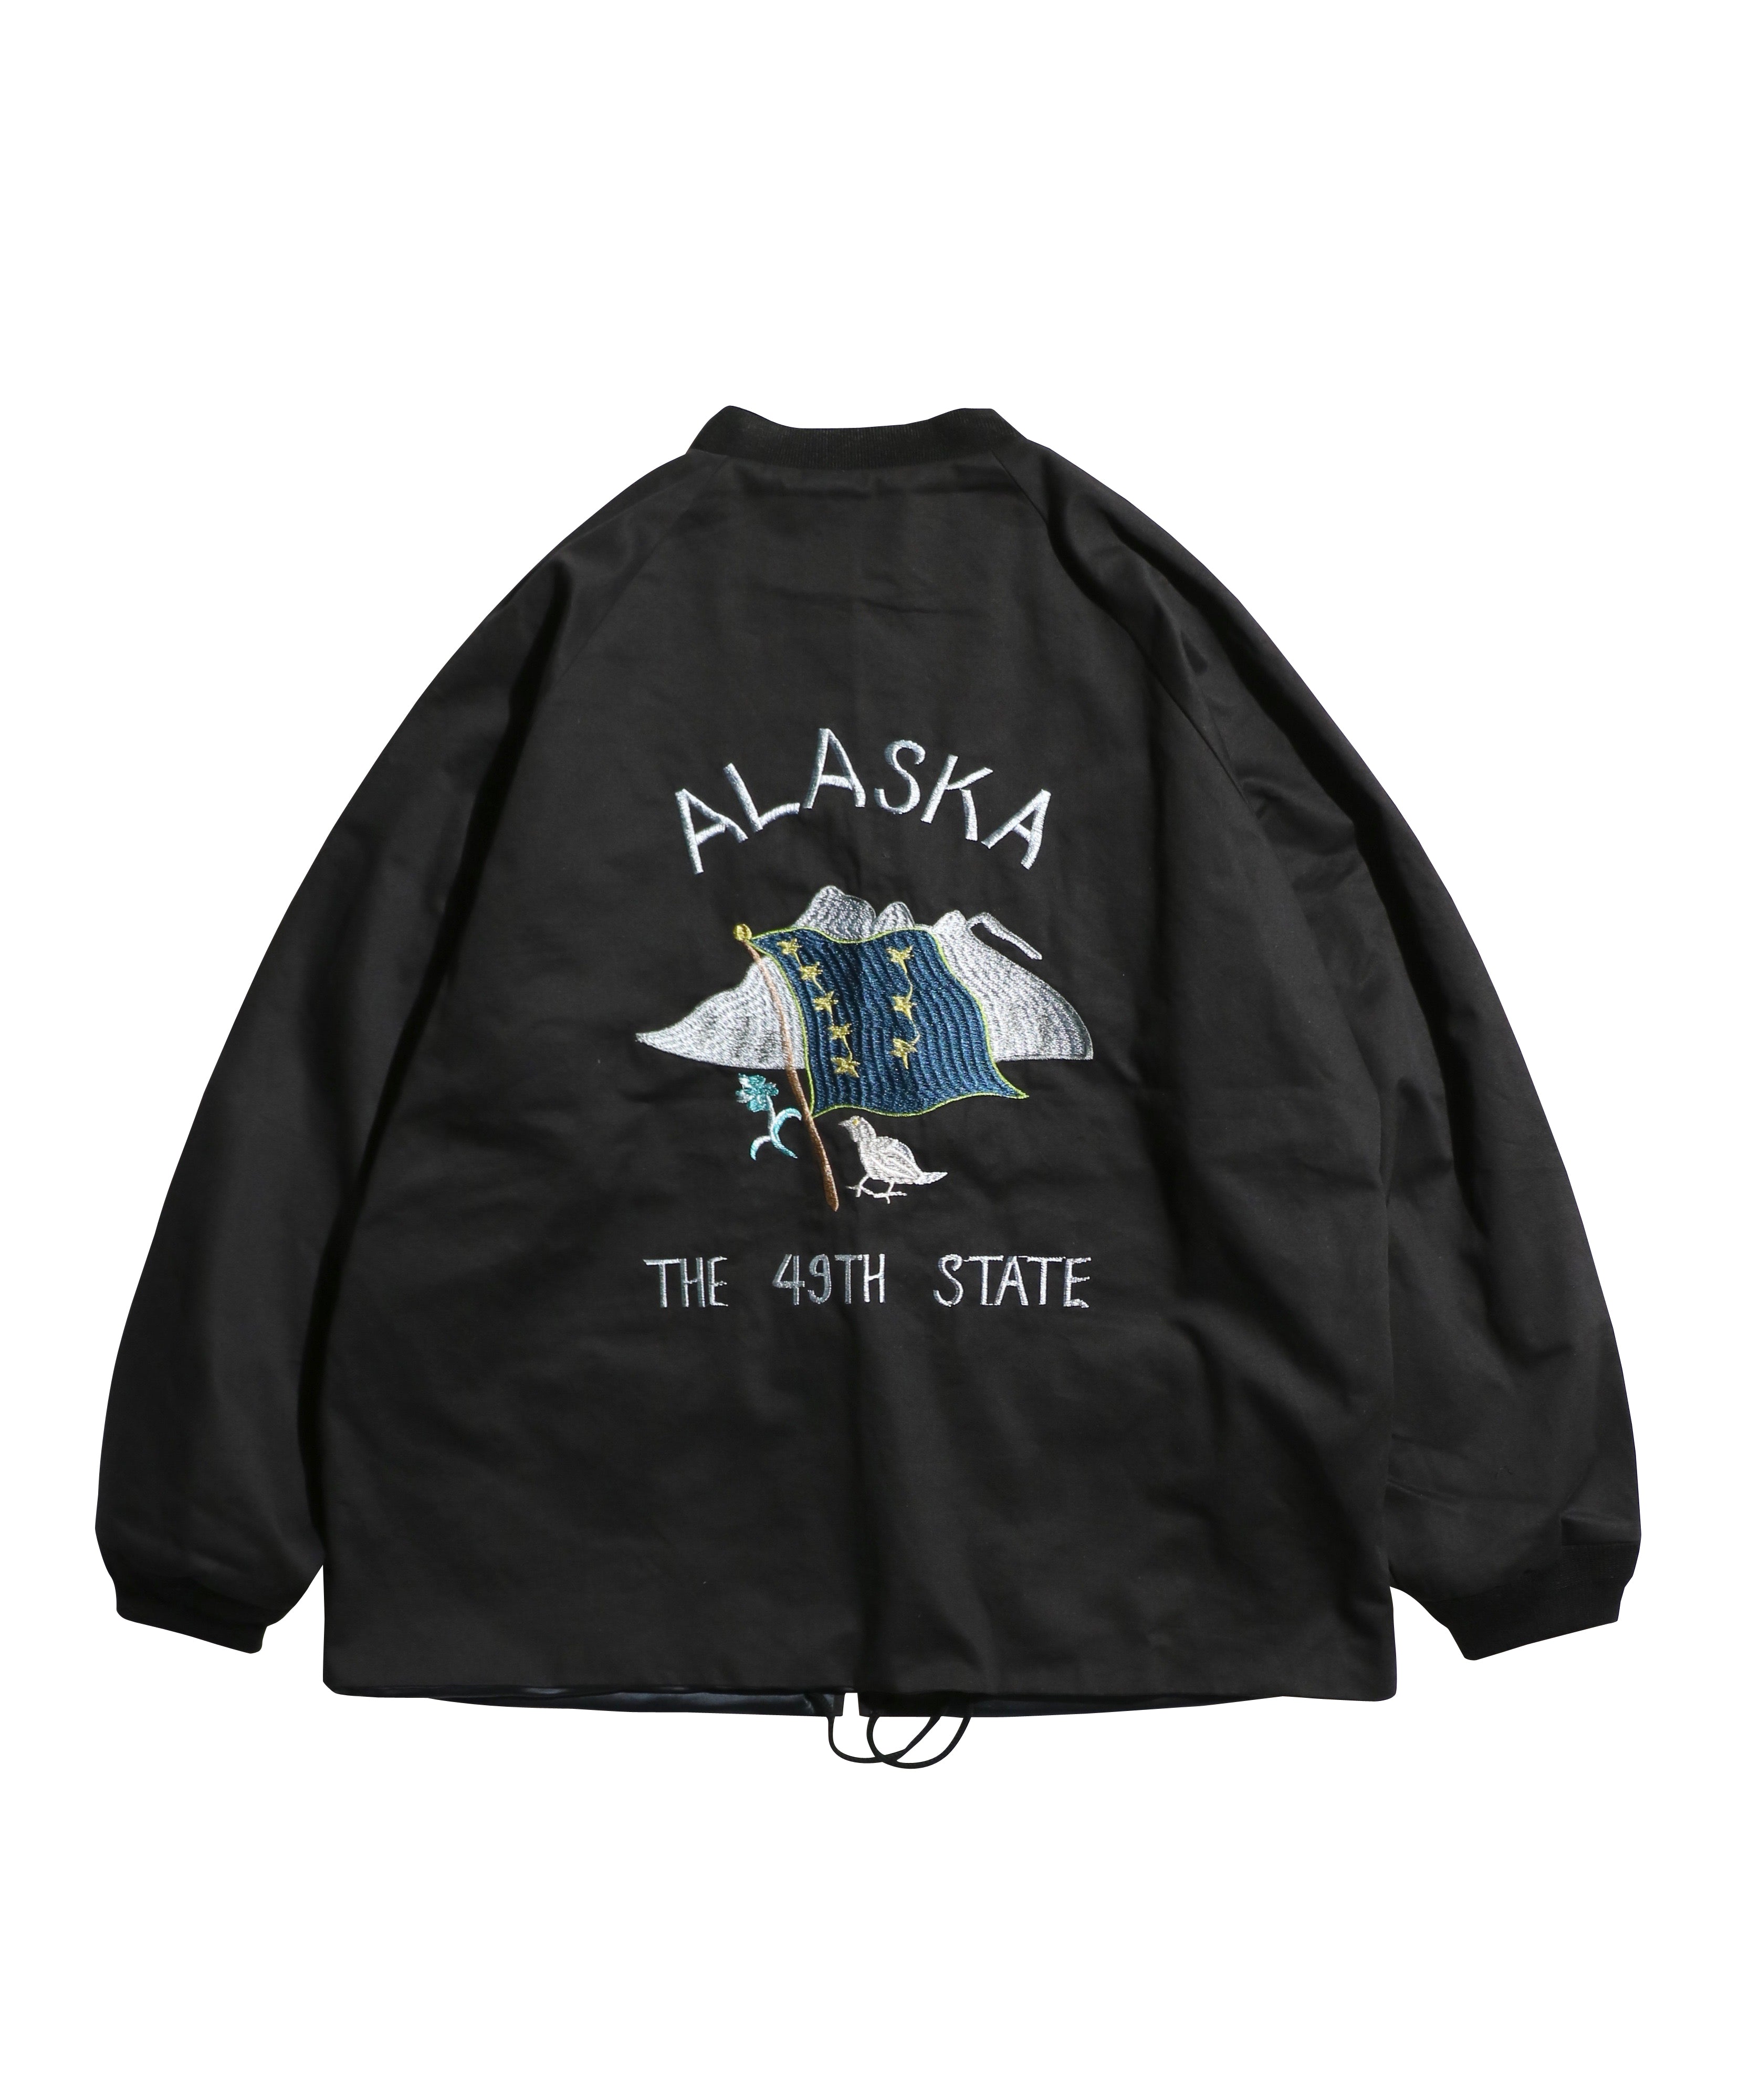 No:tl24s001 | Name:souver alaska jacket | Color:Black Sateen【THRIFTY LOOK_スリフティールック】【入荷予定アイテム・入荷連絡可能】